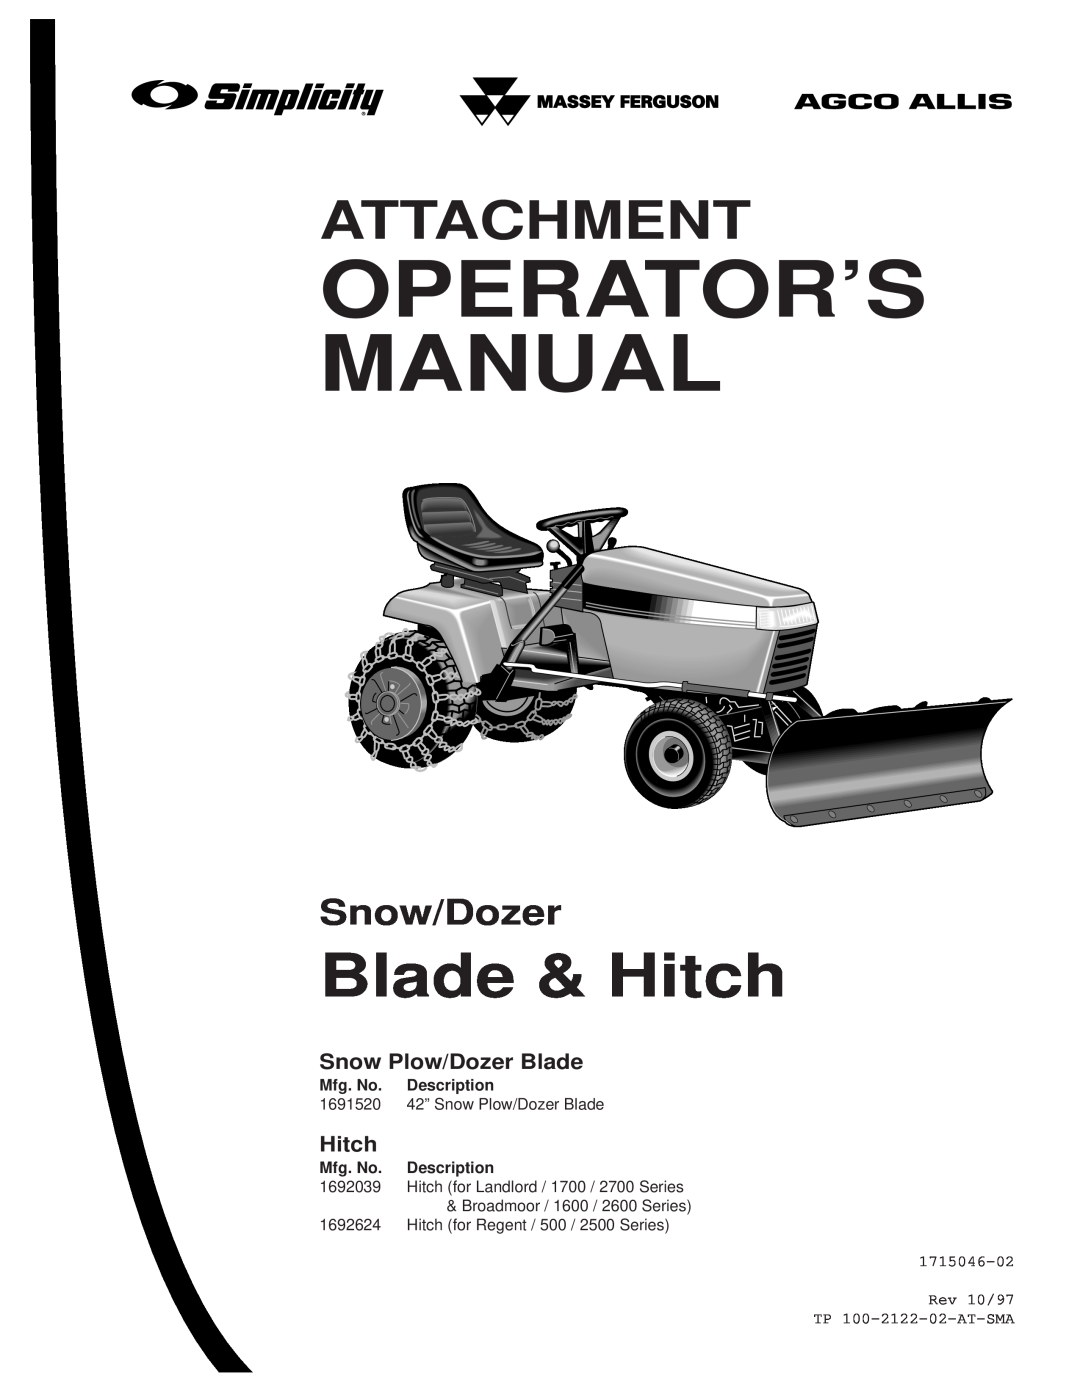 Simplicity 1692624, 1692039 manual Snow Plow/Dozer Blade, Operator’S Manual, Blade & Hitch, Attachment, Snow/Dozer 